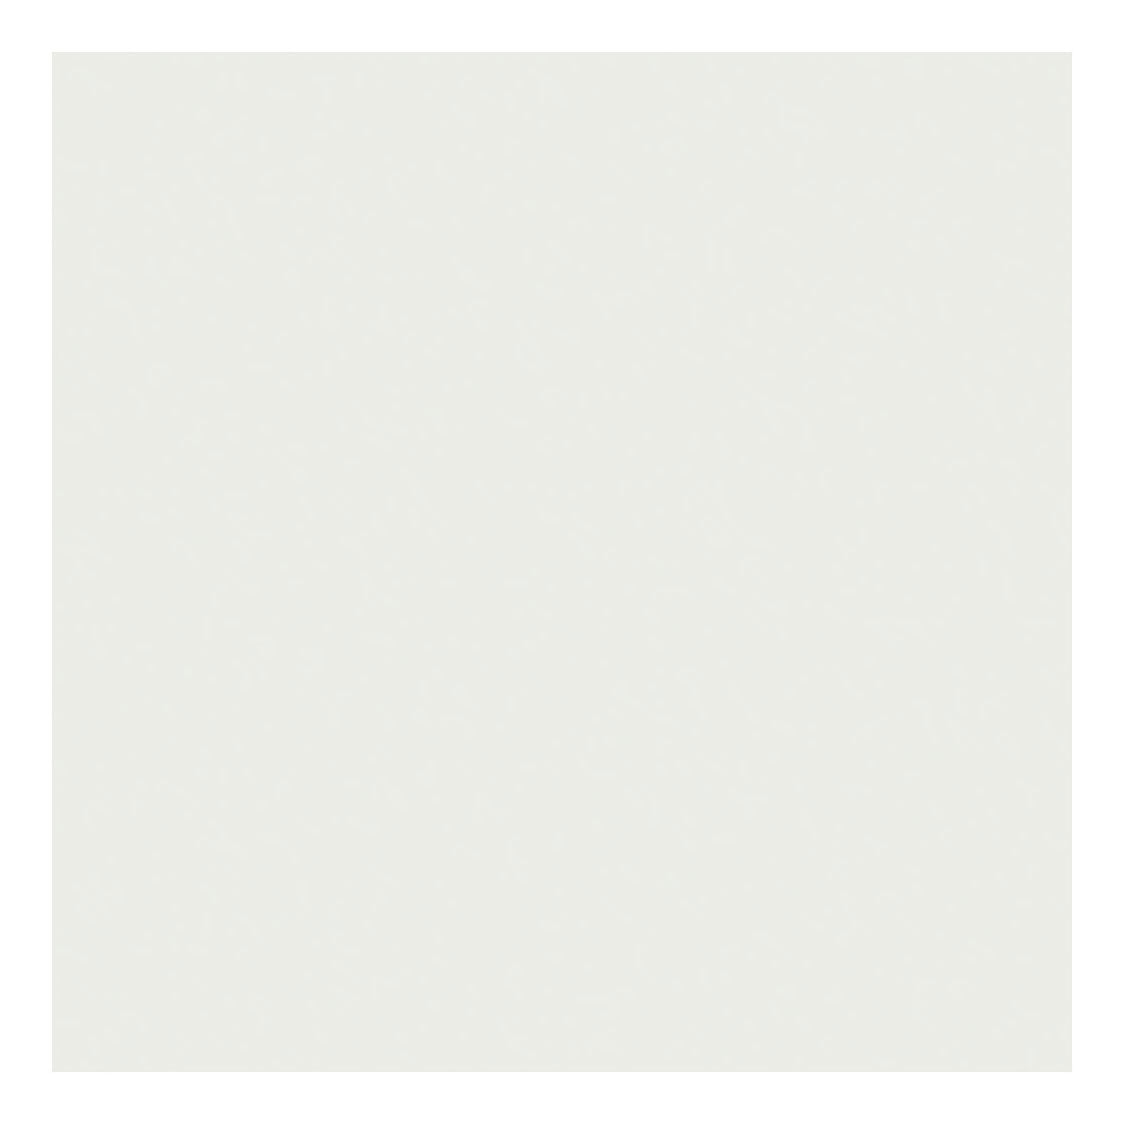 Creativ Company Carta velina bianca 10 fogli 14 gr, 50x70cm